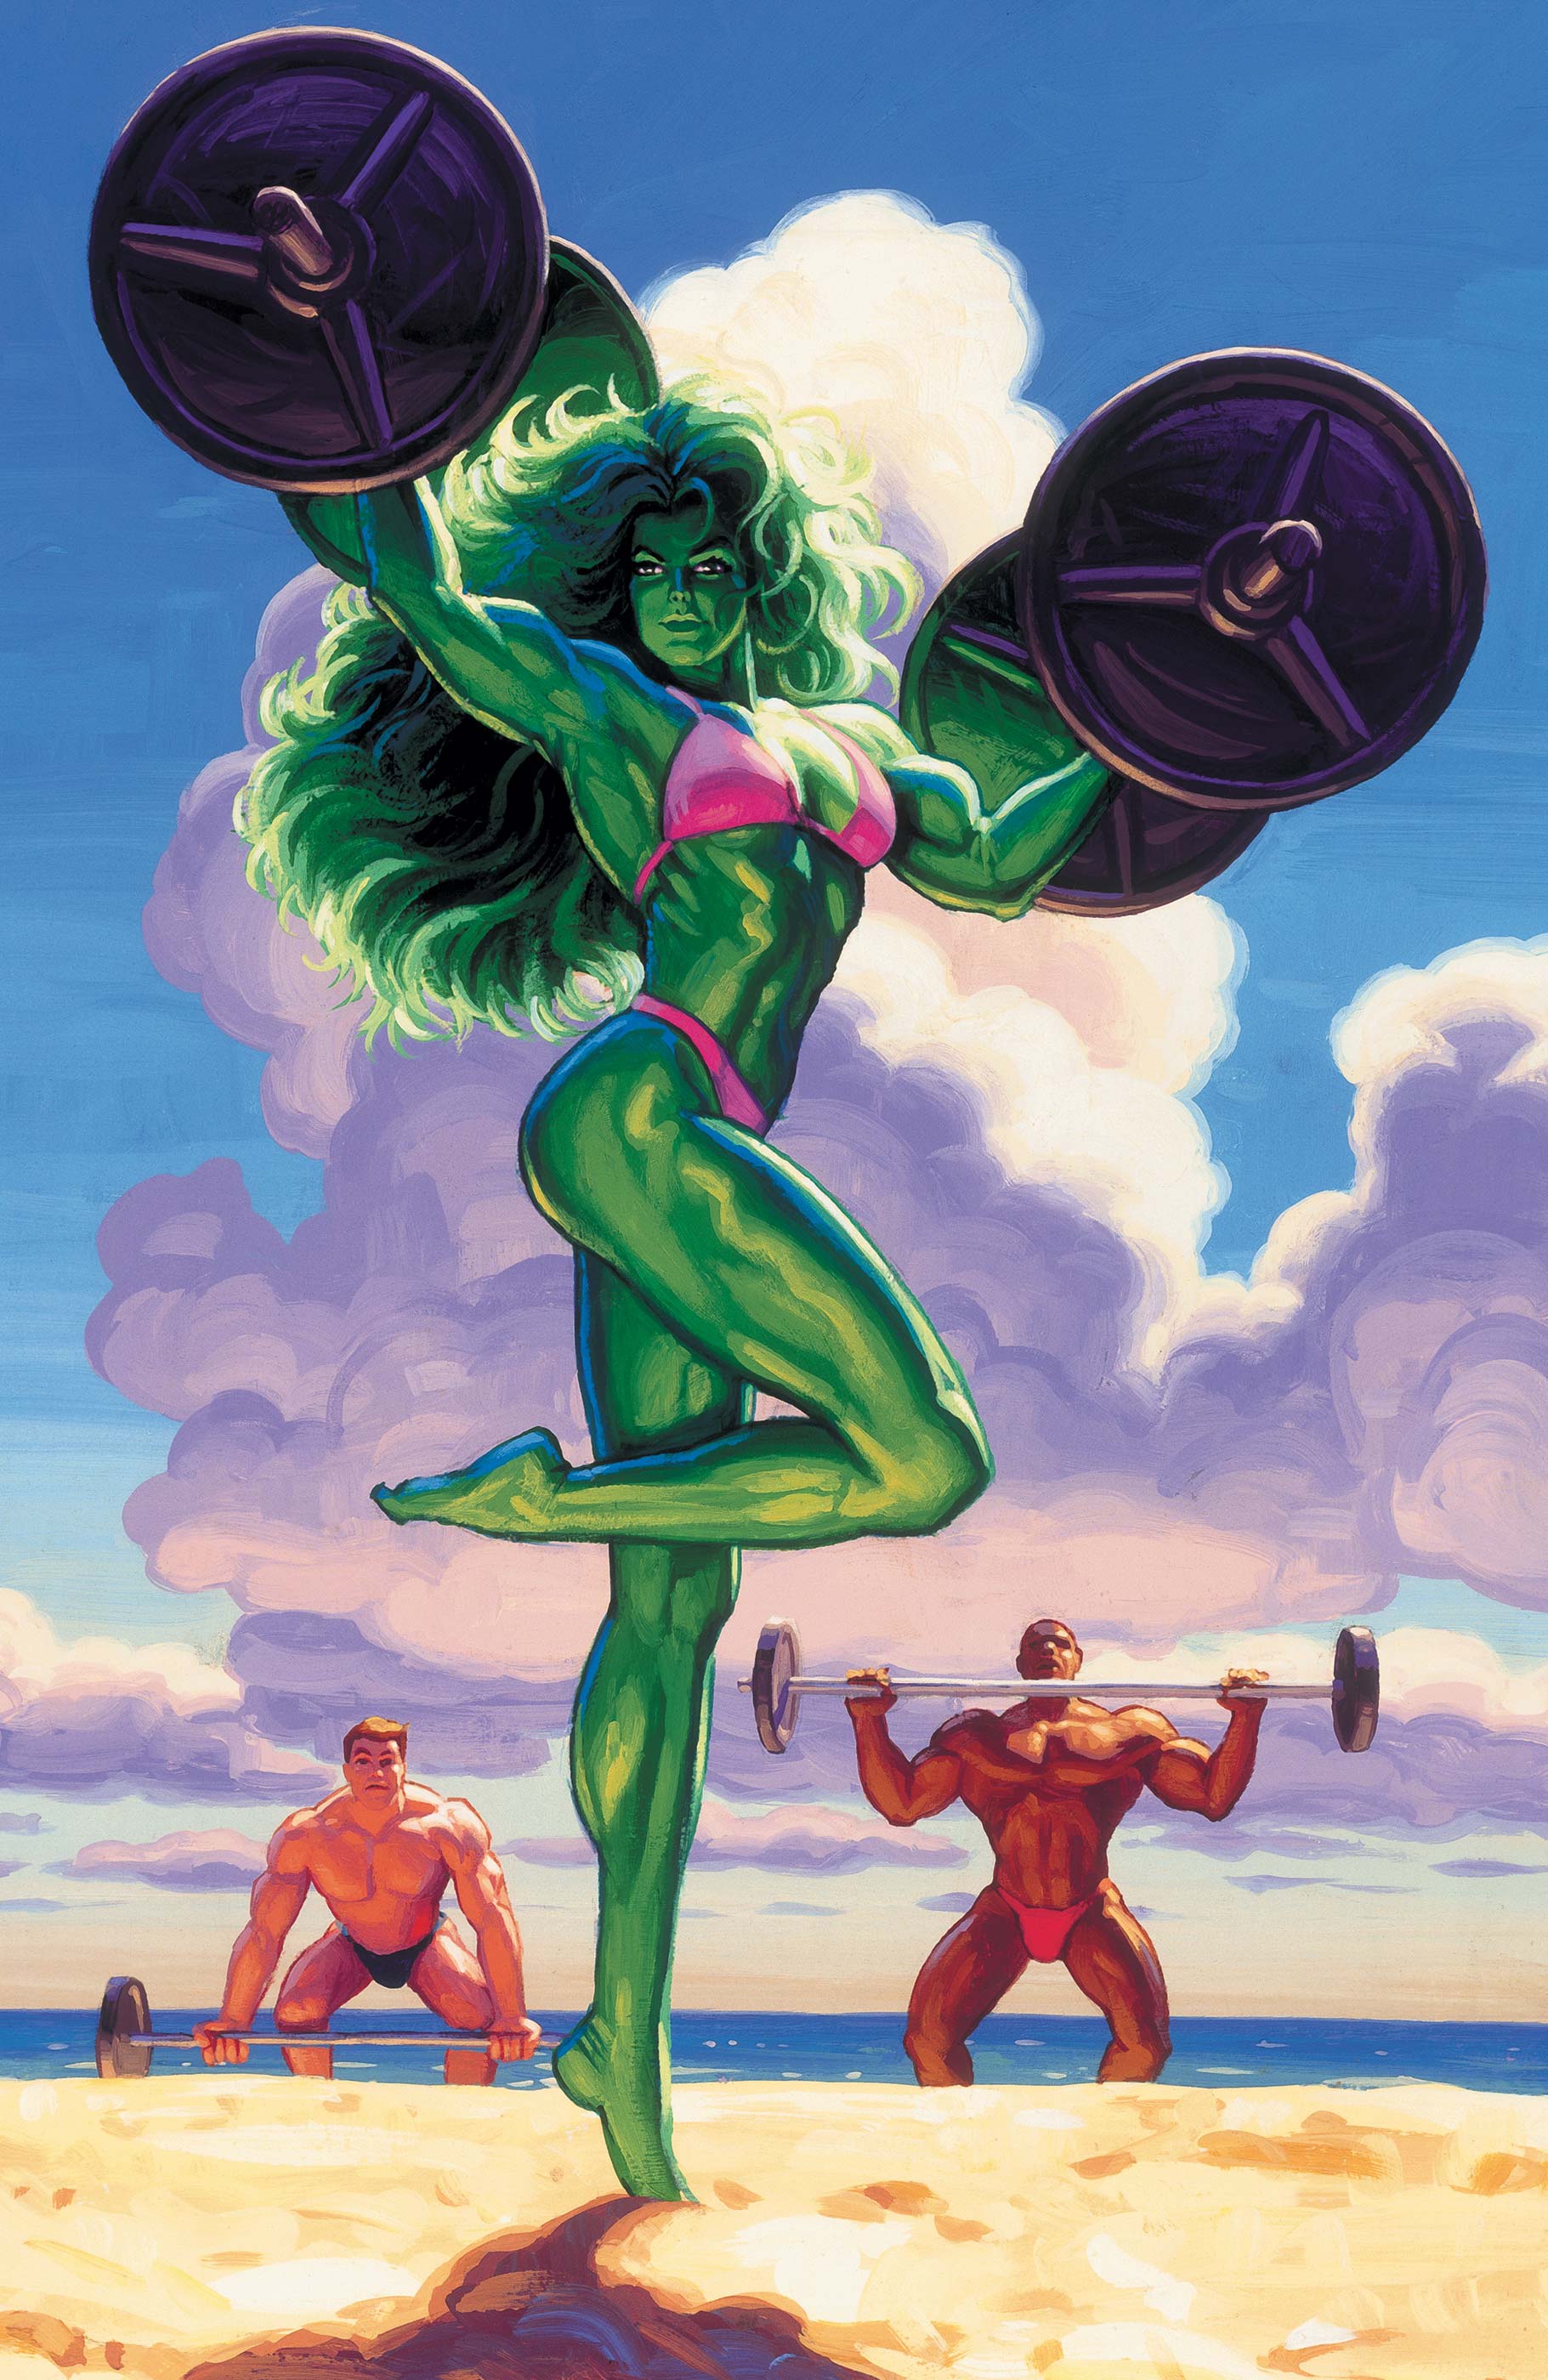 Sensational She-Hulk (2023) #5 (Variant)